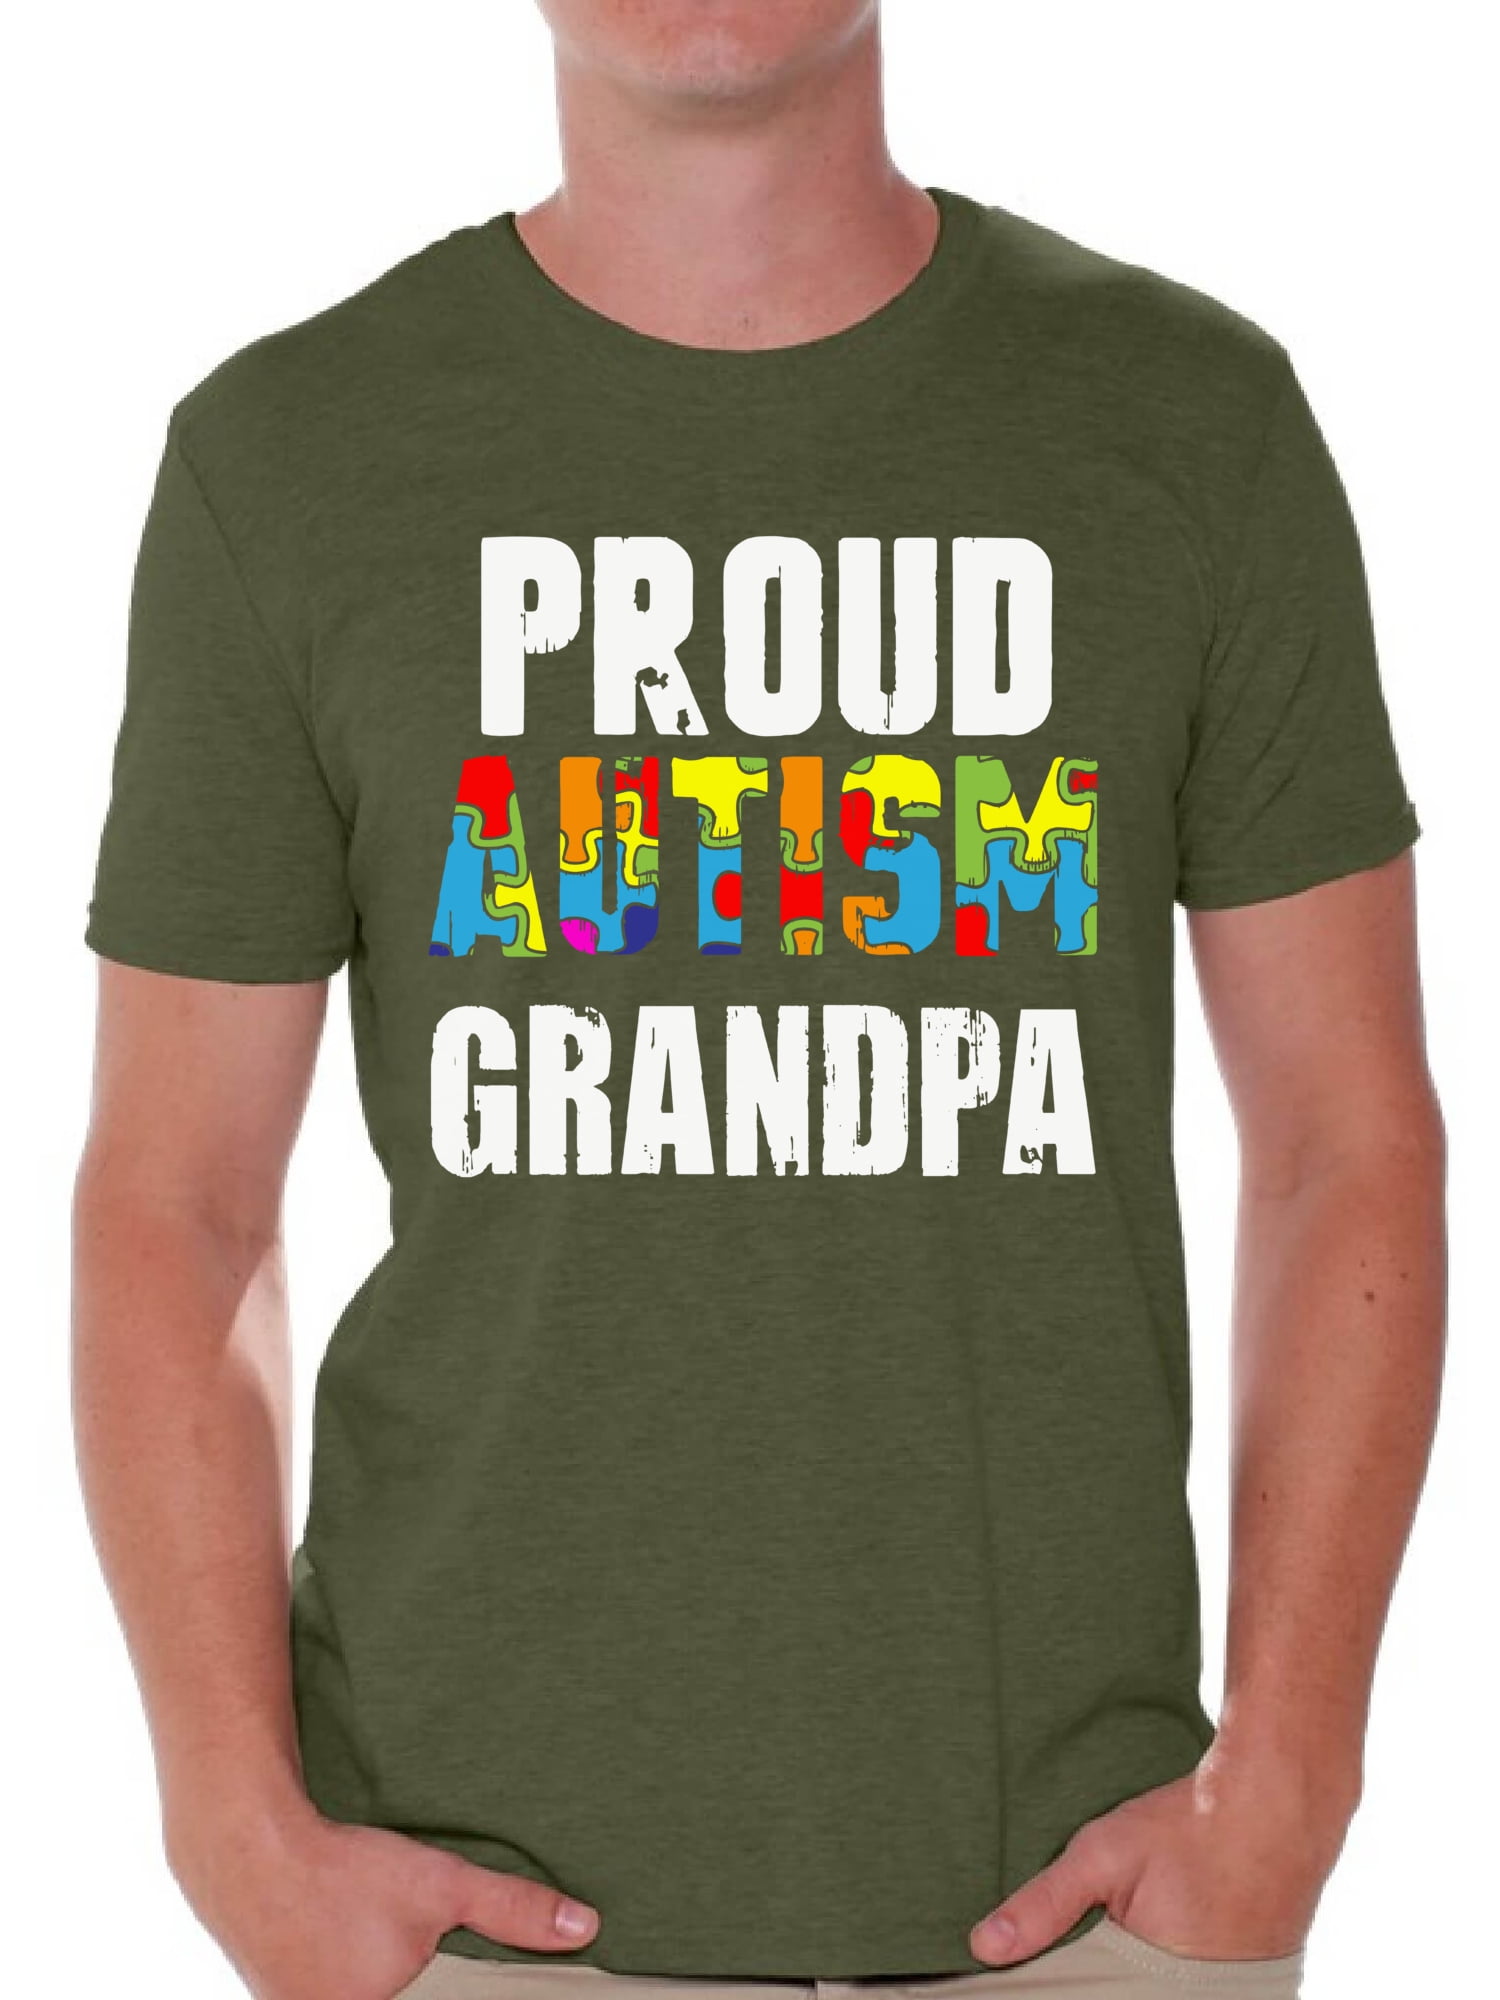 Grandpa Autism Awareness Tee Shirt Short Sleeve Shirts 